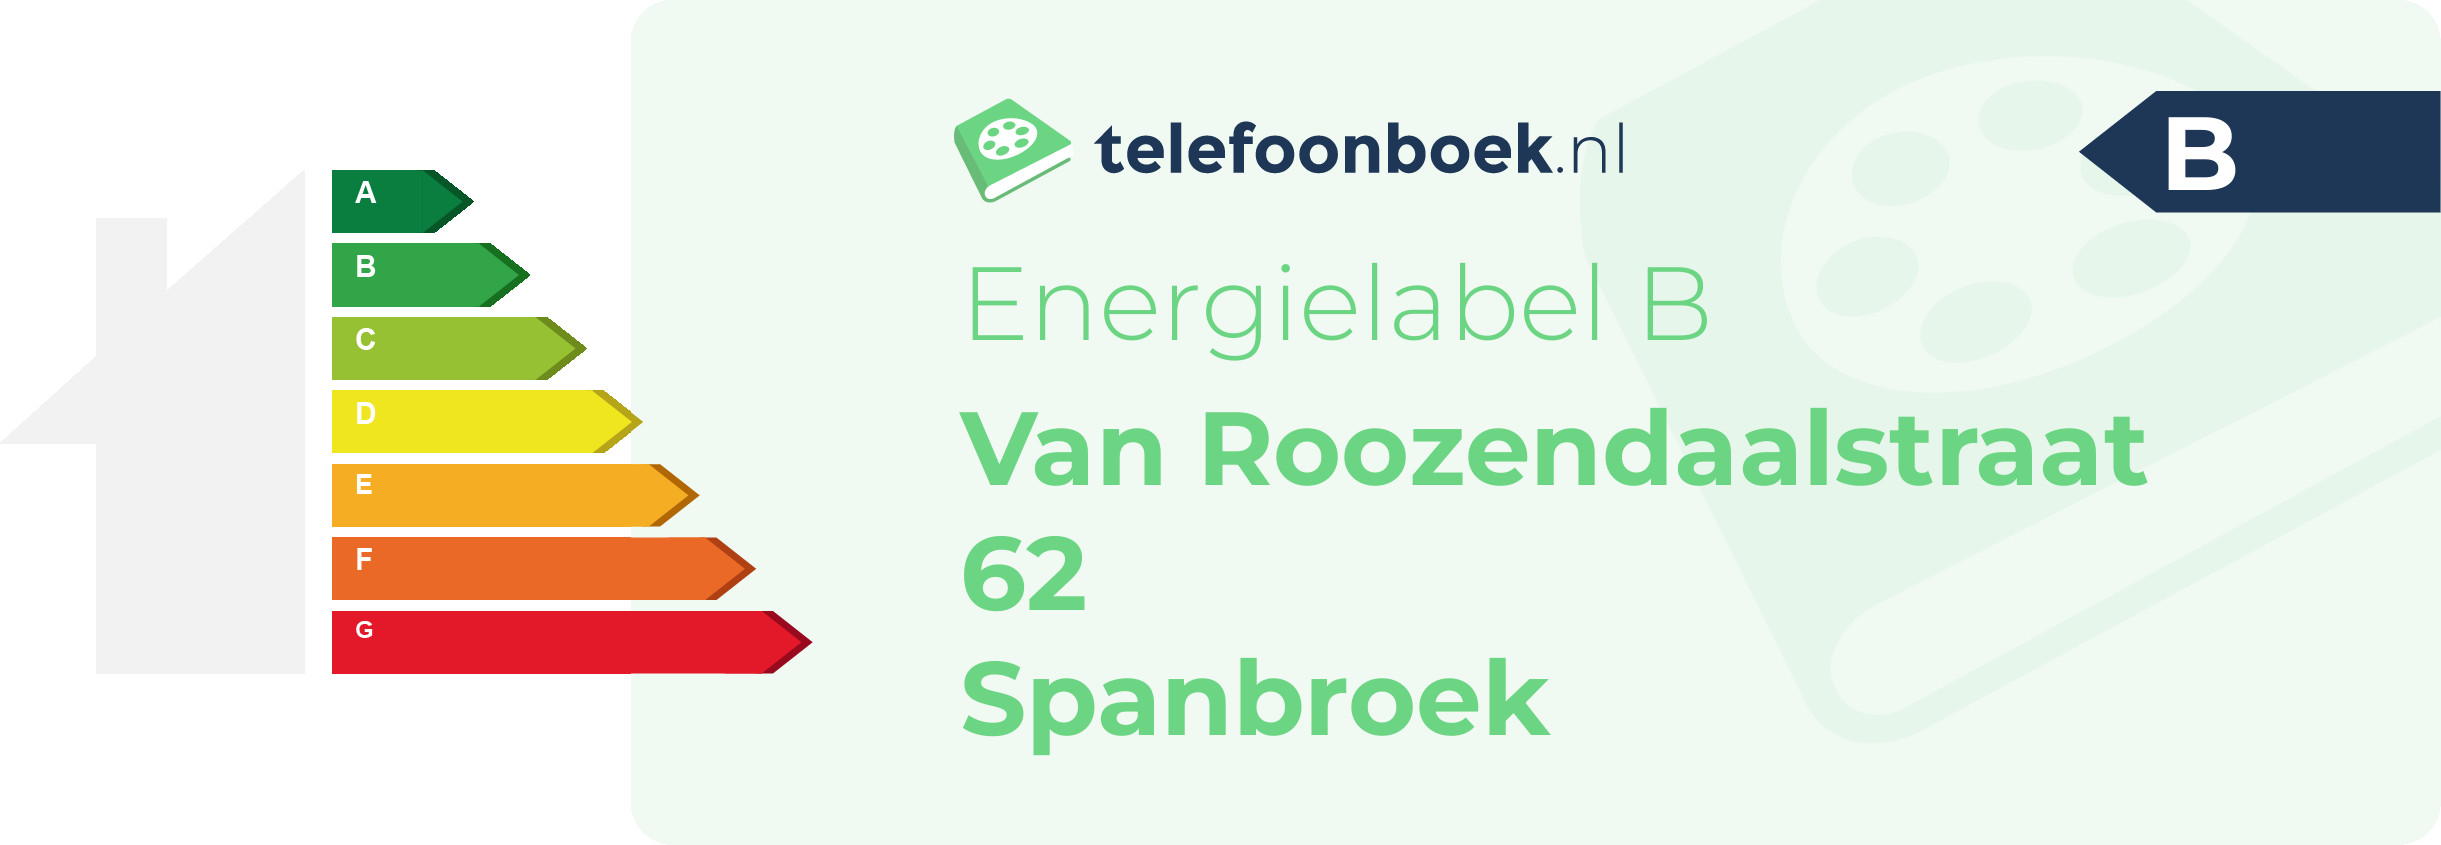 Energielabel Van Roozendaalstraat 62 Spanbroek